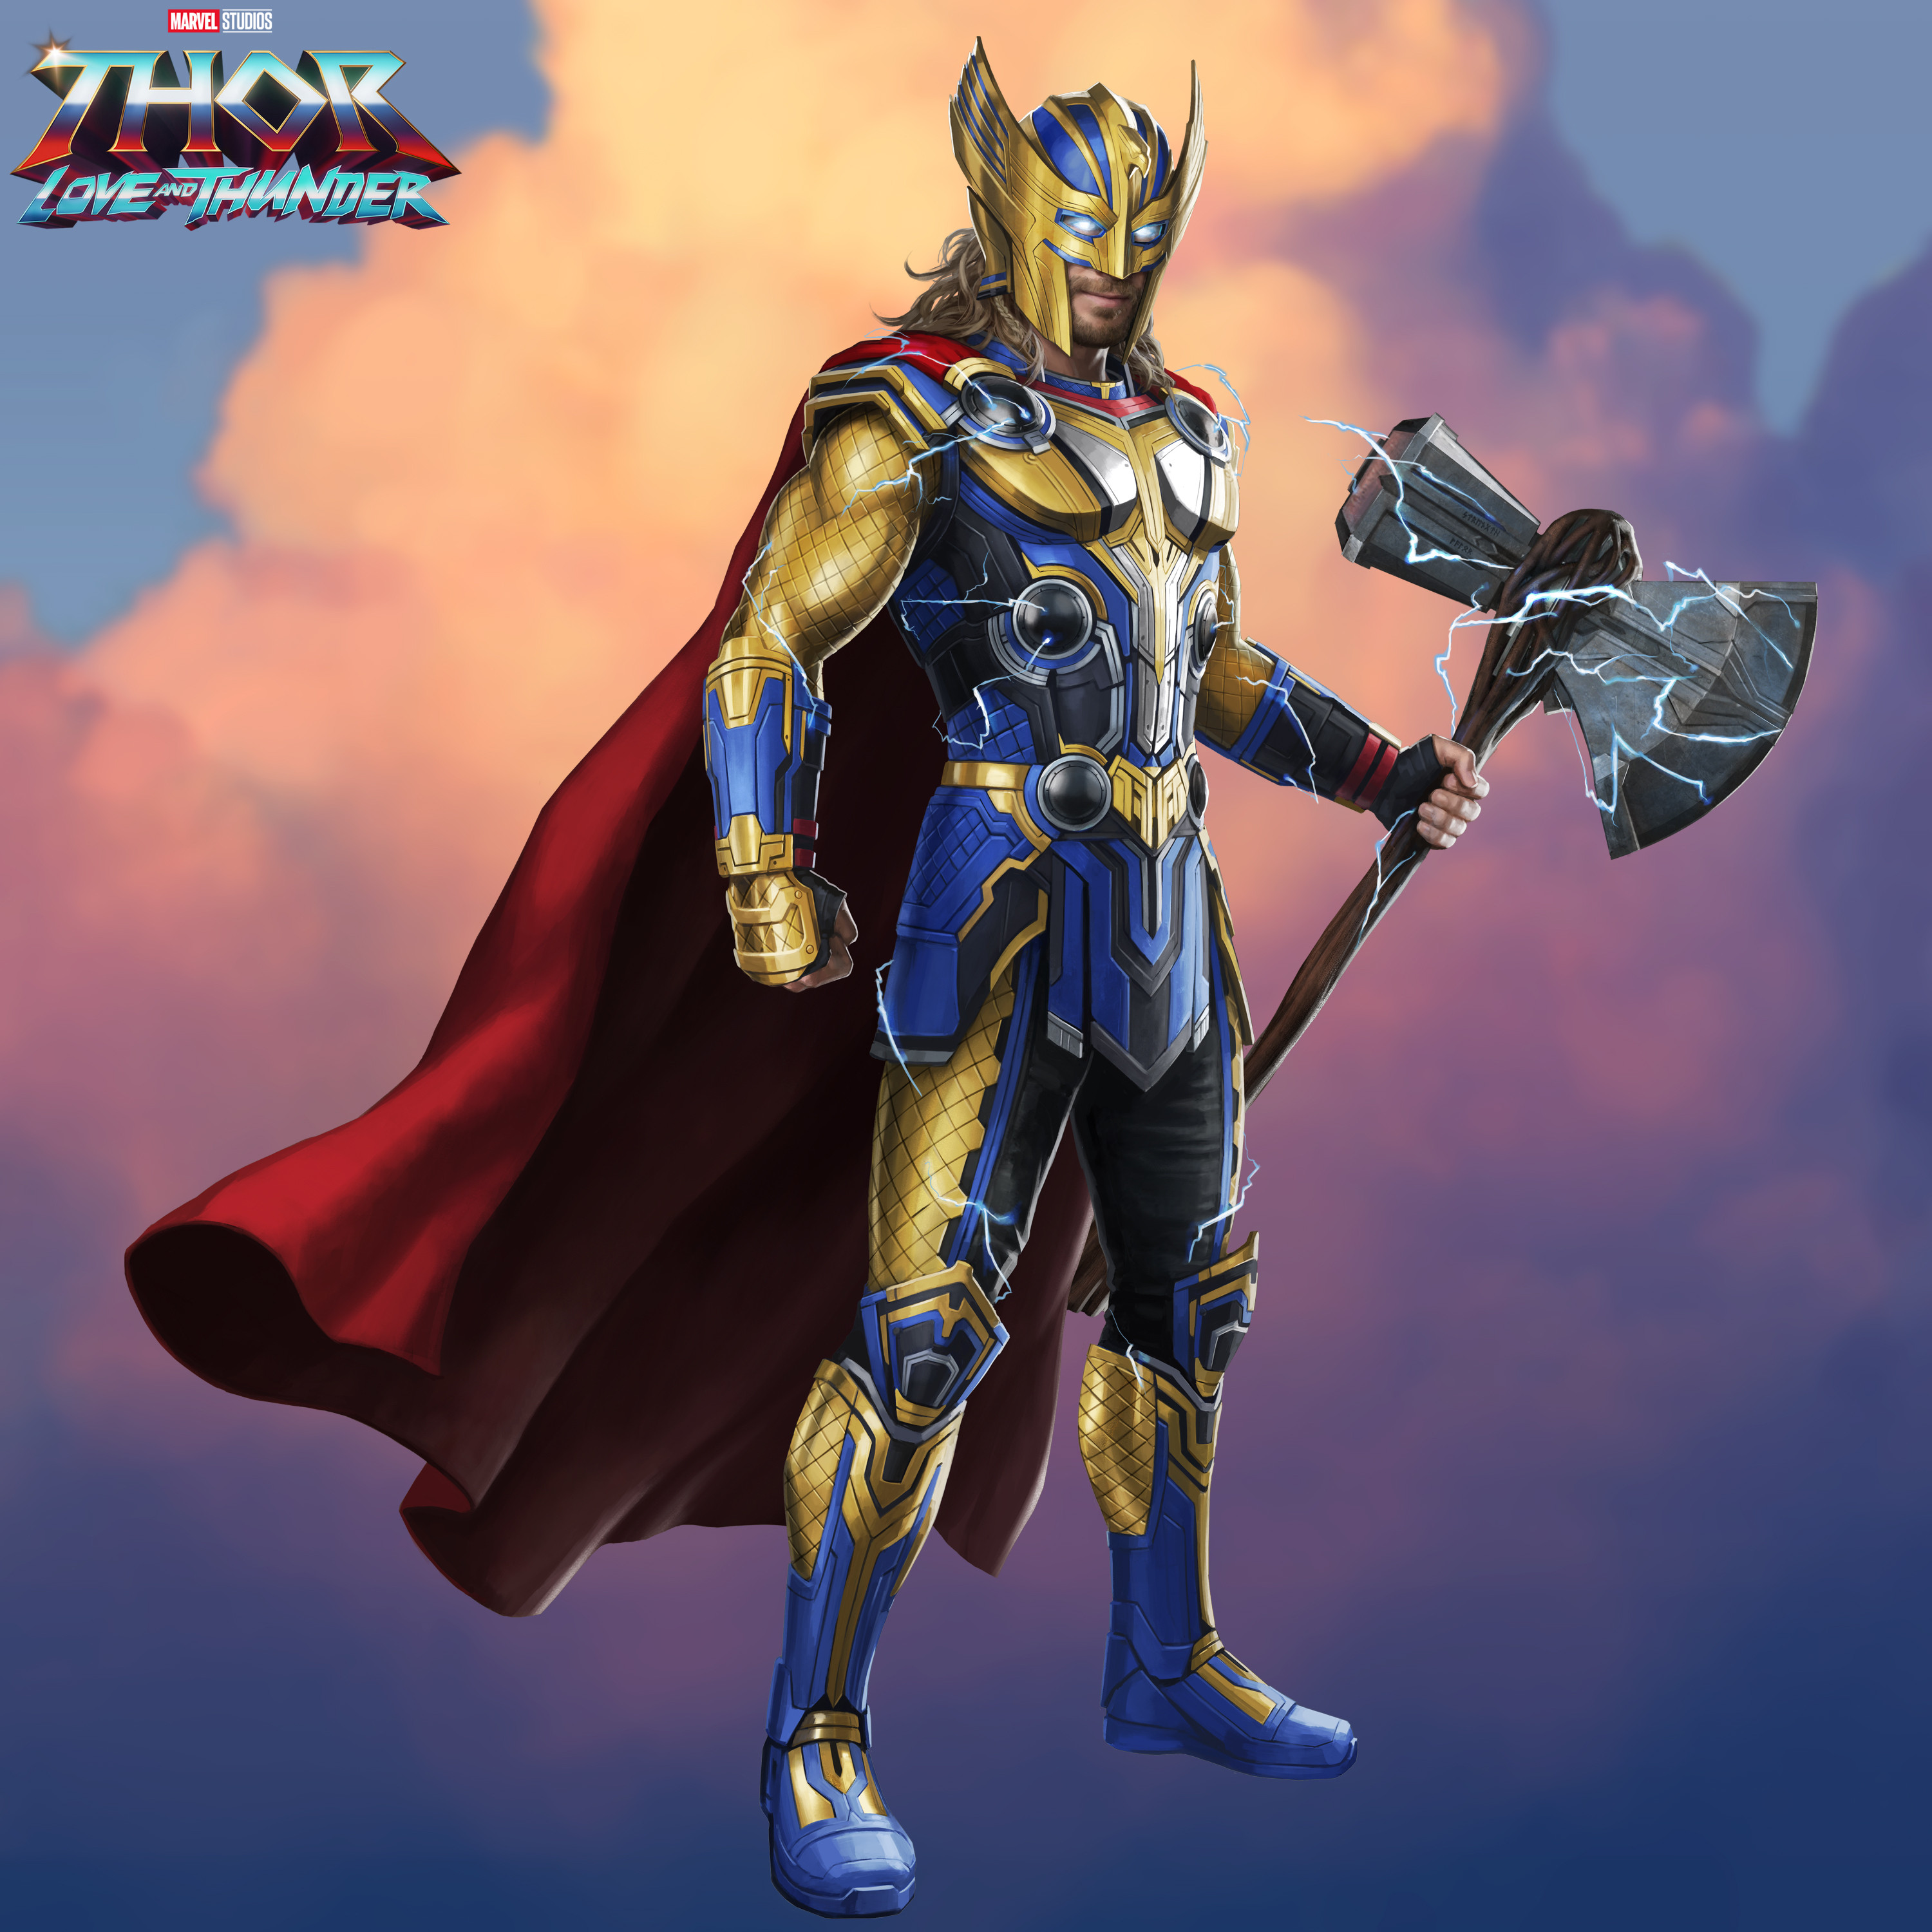 Thor pose